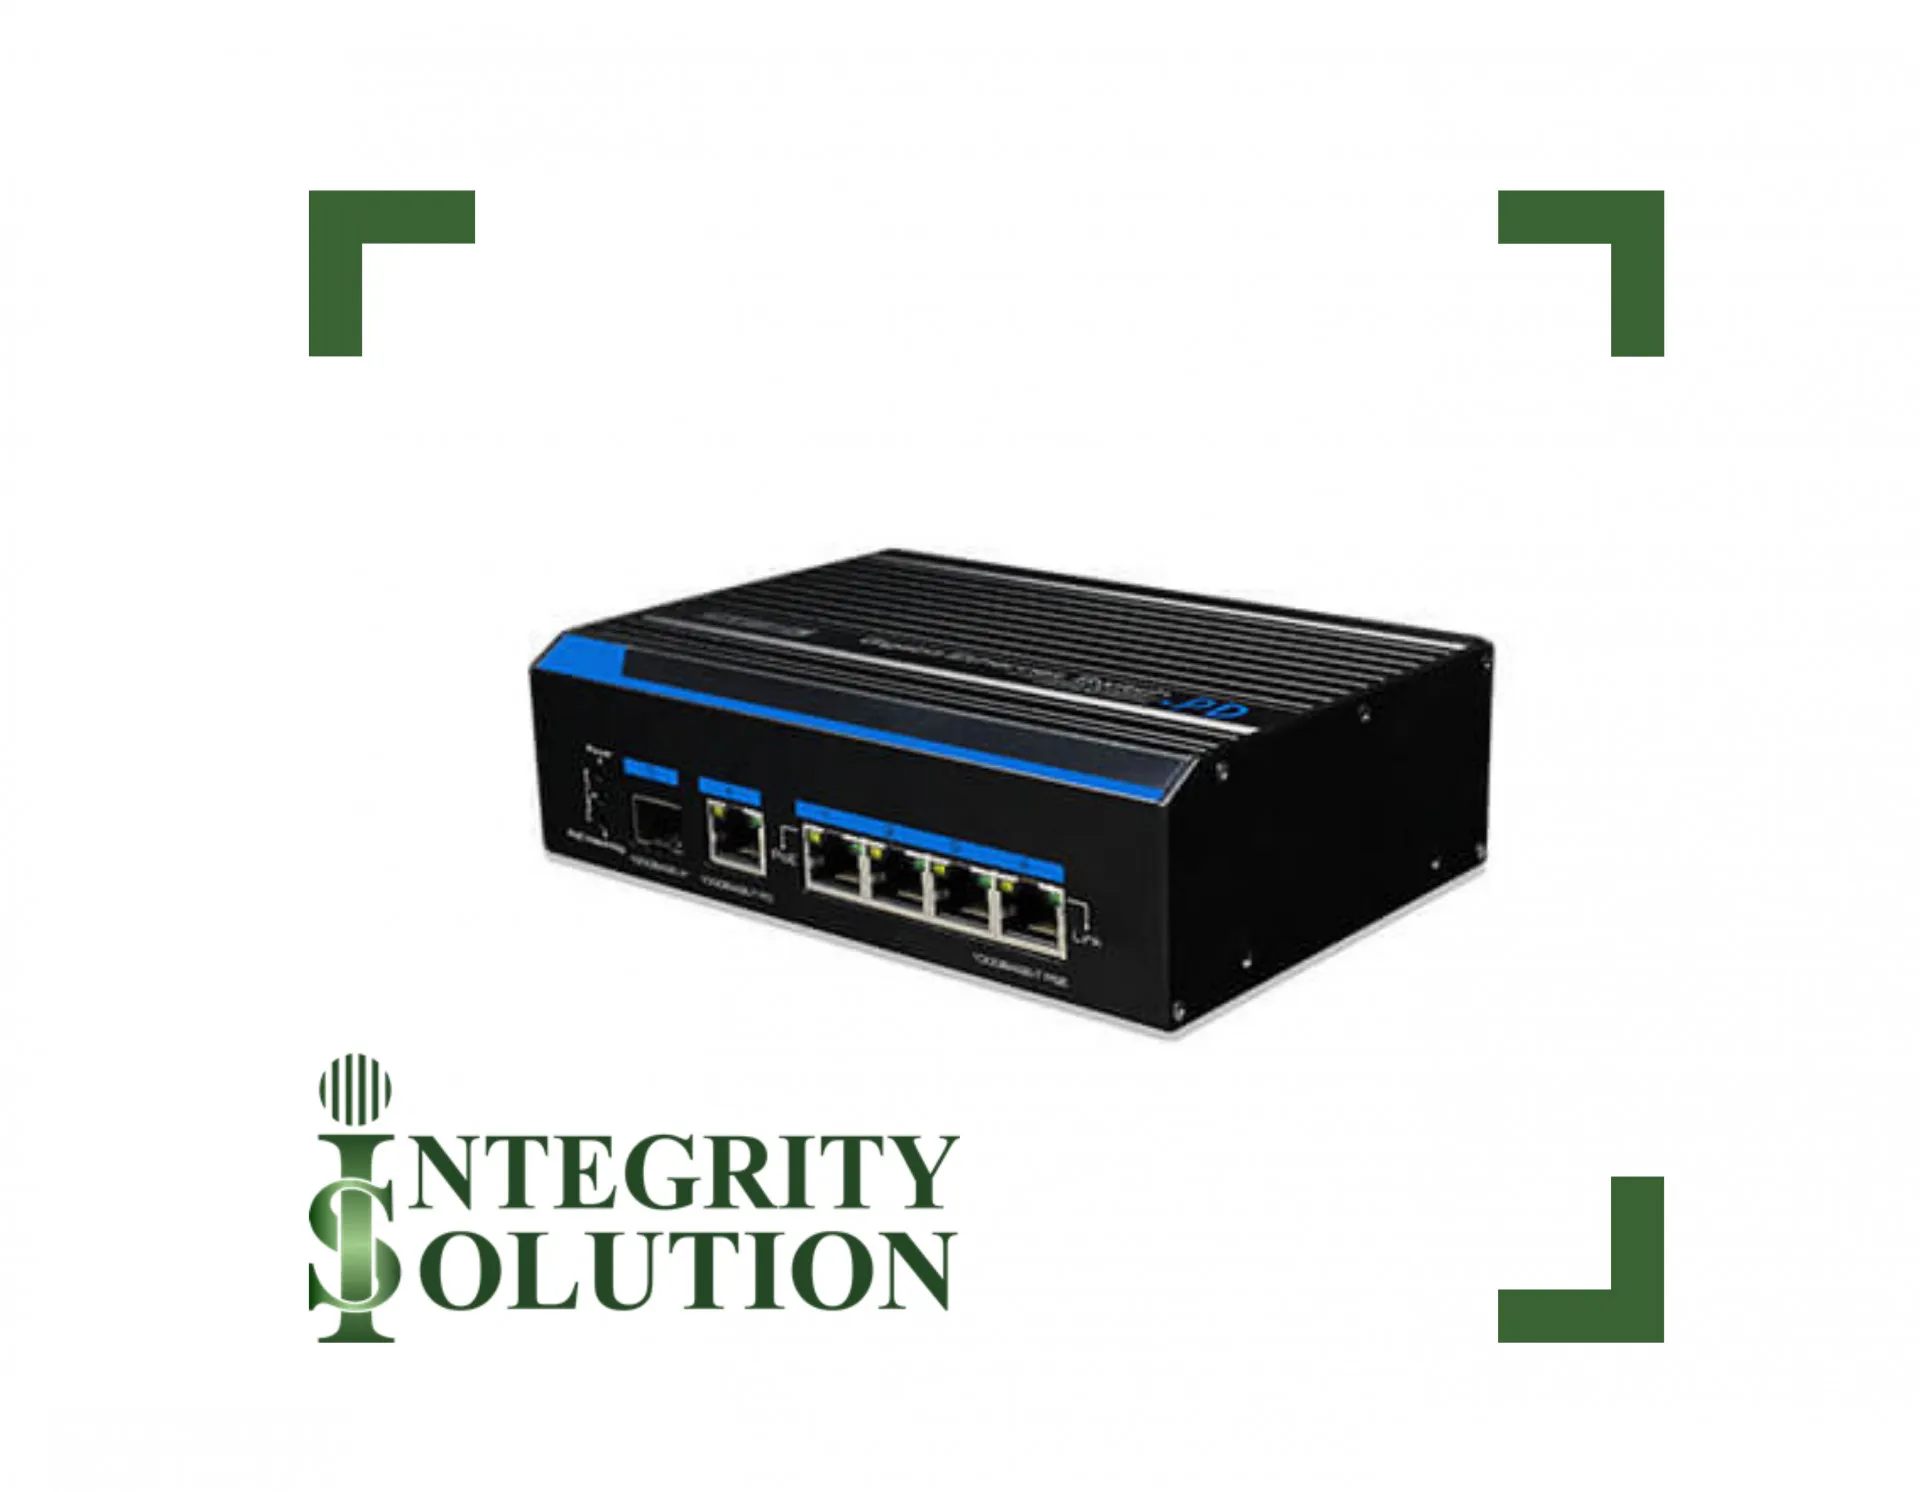 Utepo Коммутатор UTP7204GE-PD - 4 портовый POE, 1 гигабитный uplink RJ45, 1 гигабитный SFP слот Integrity Solution#1